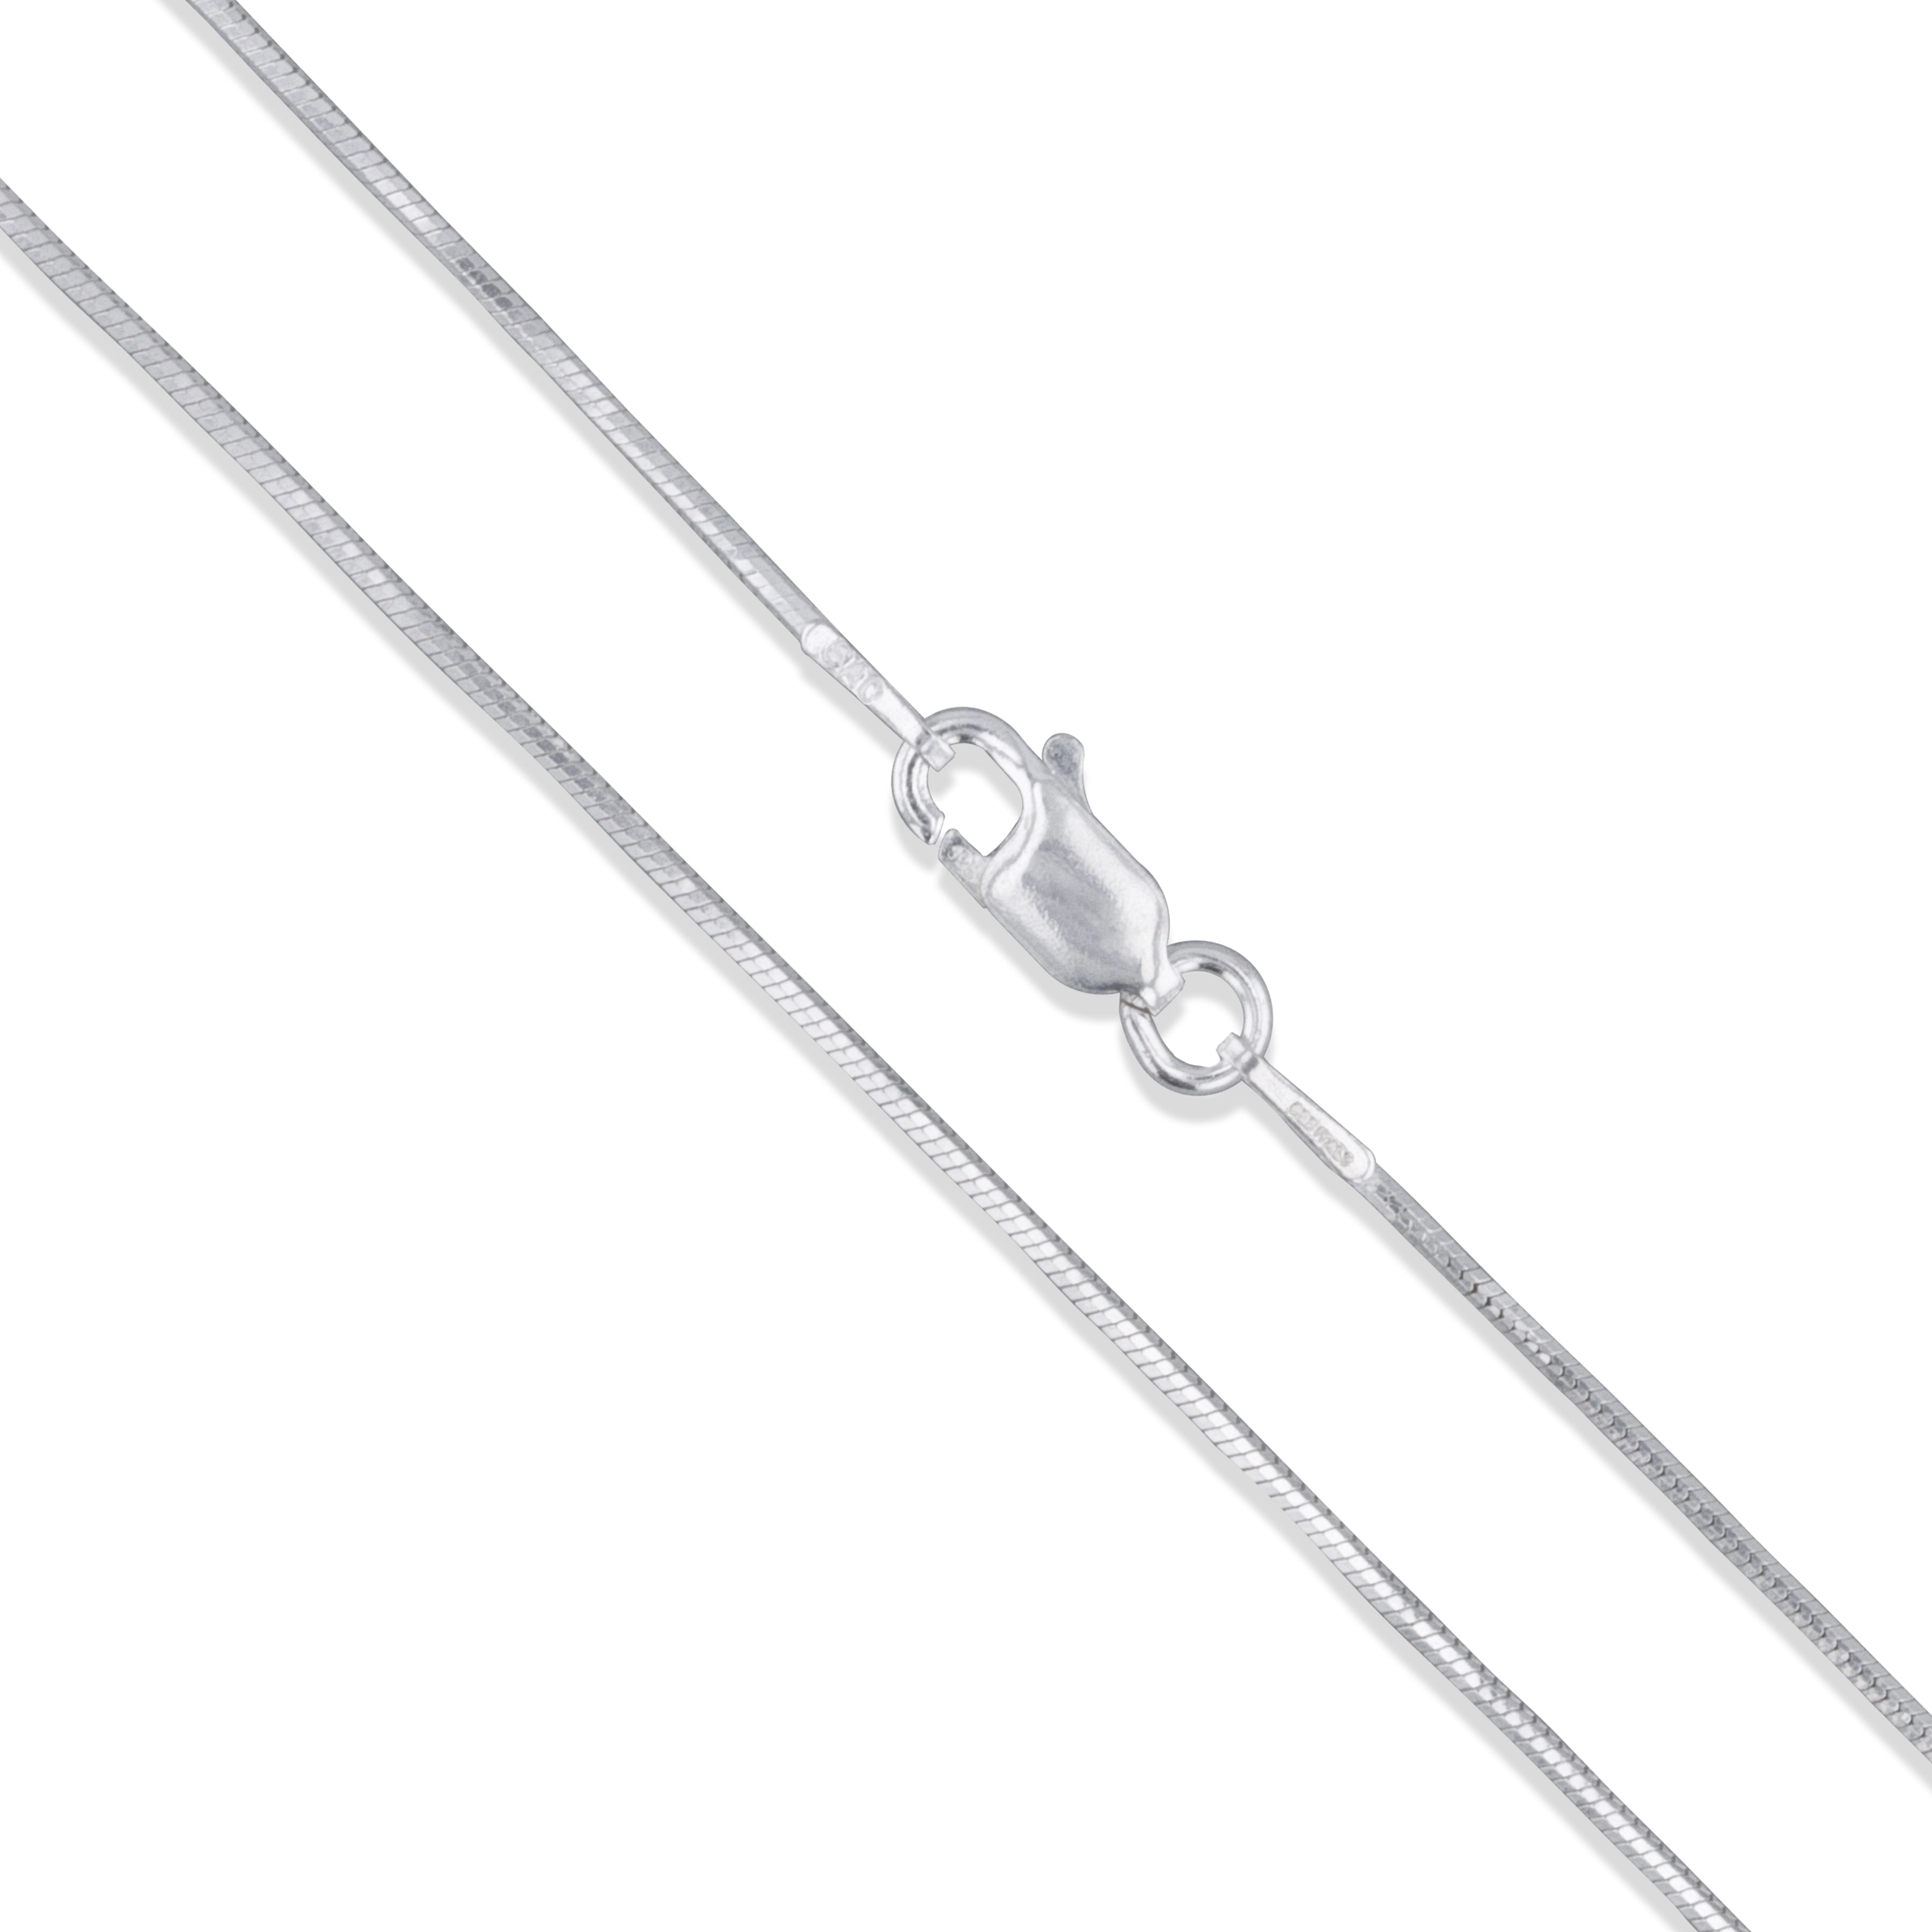 Pori Jewelers 925 Sterling Silver Italian Magic Snake Chain Necklace - 16-30